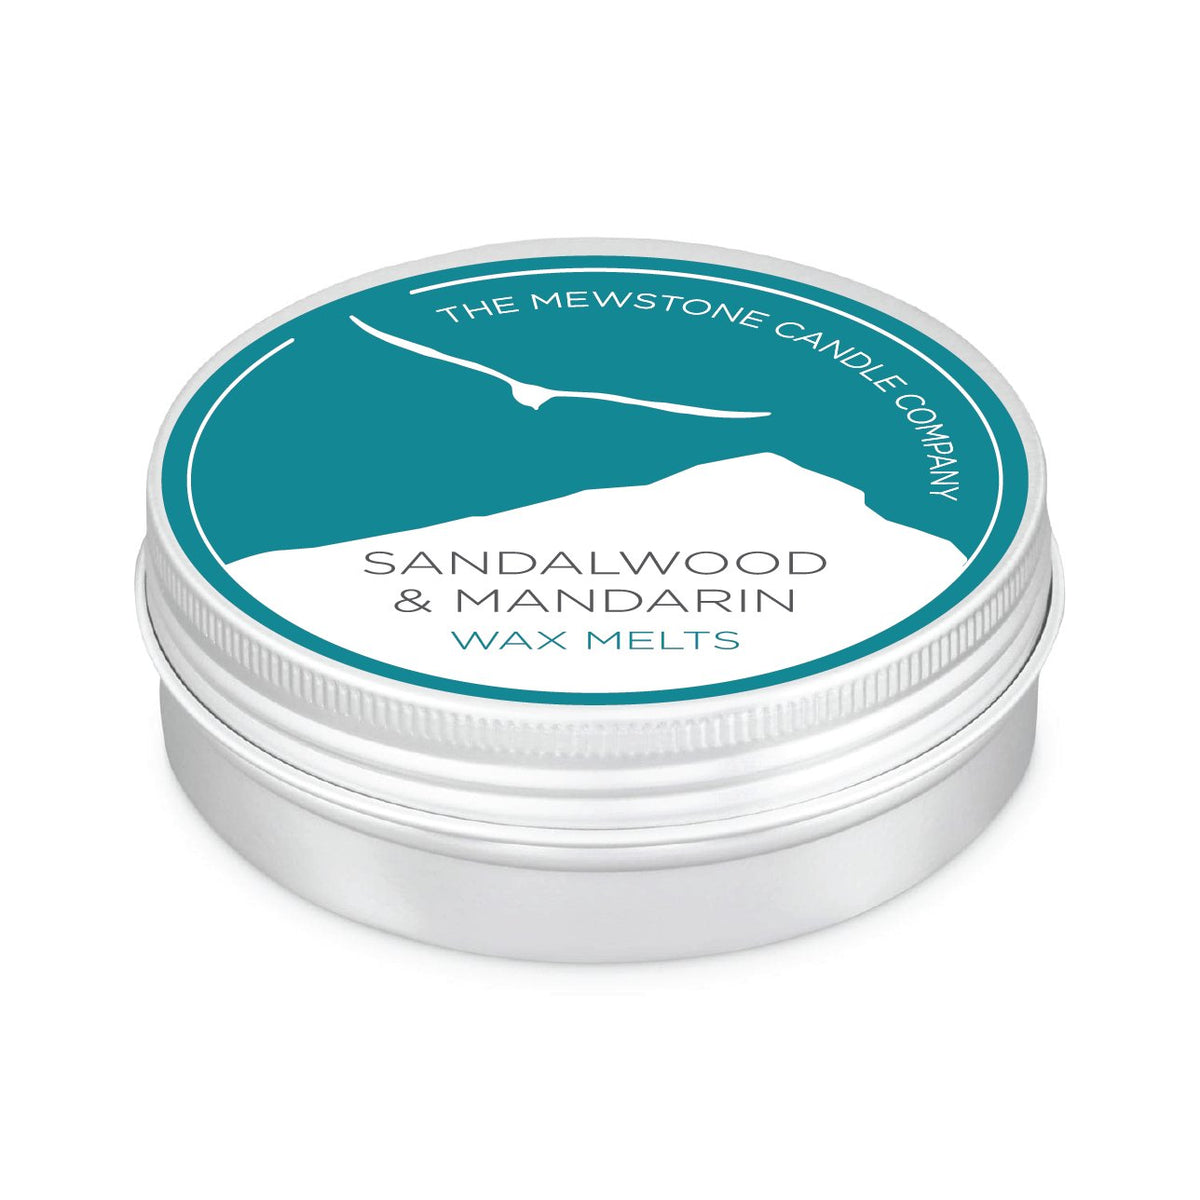 Sandalwood & Mandarin Pick & Mix Wax Melt - The Mewstone Candle Co